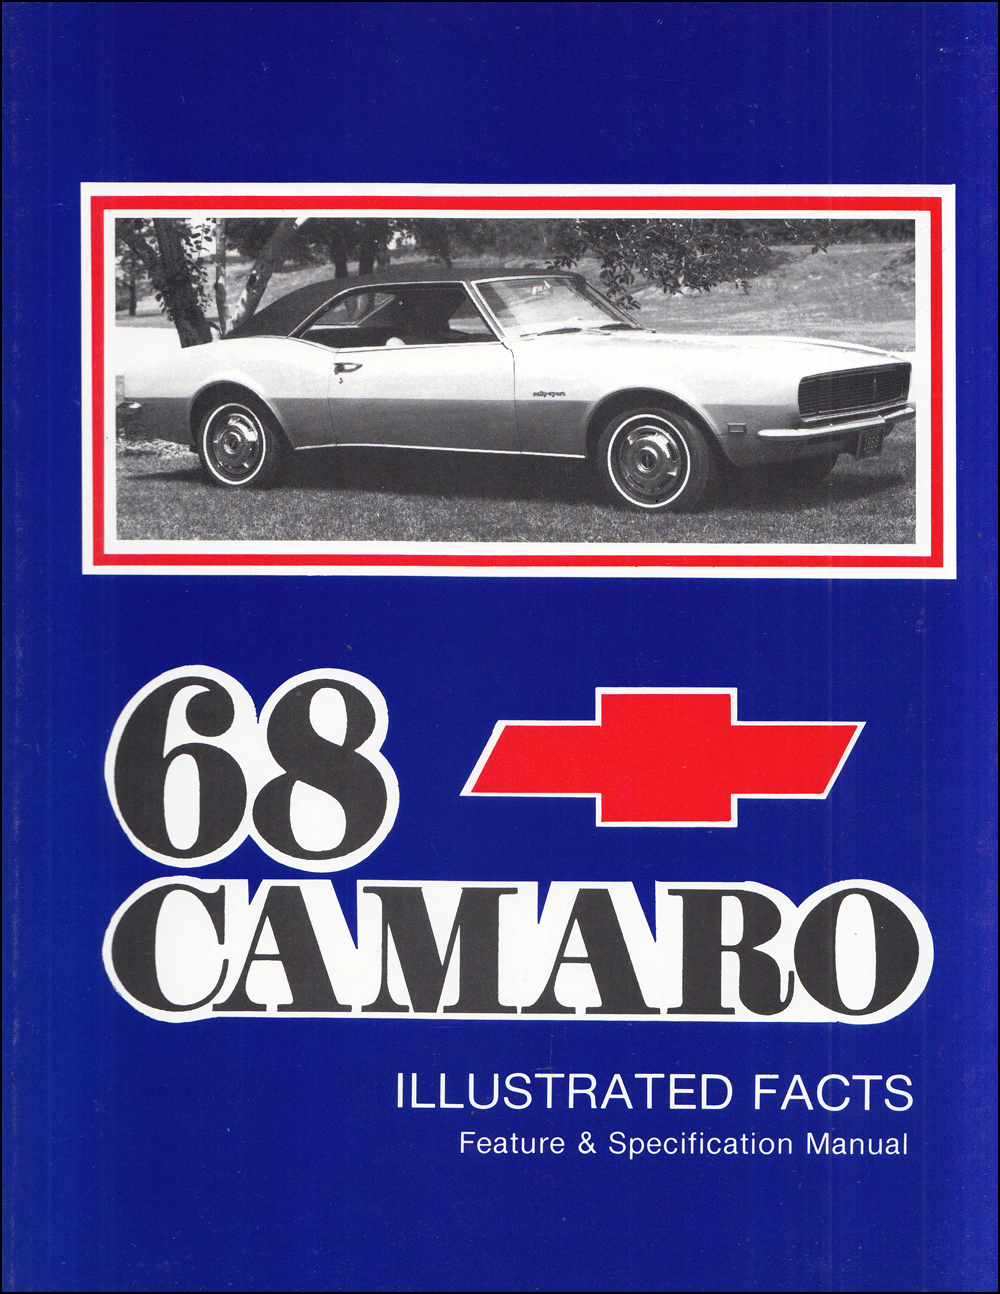 1968 Chevrolet Camaro Finger Tip Facts Book Reprint